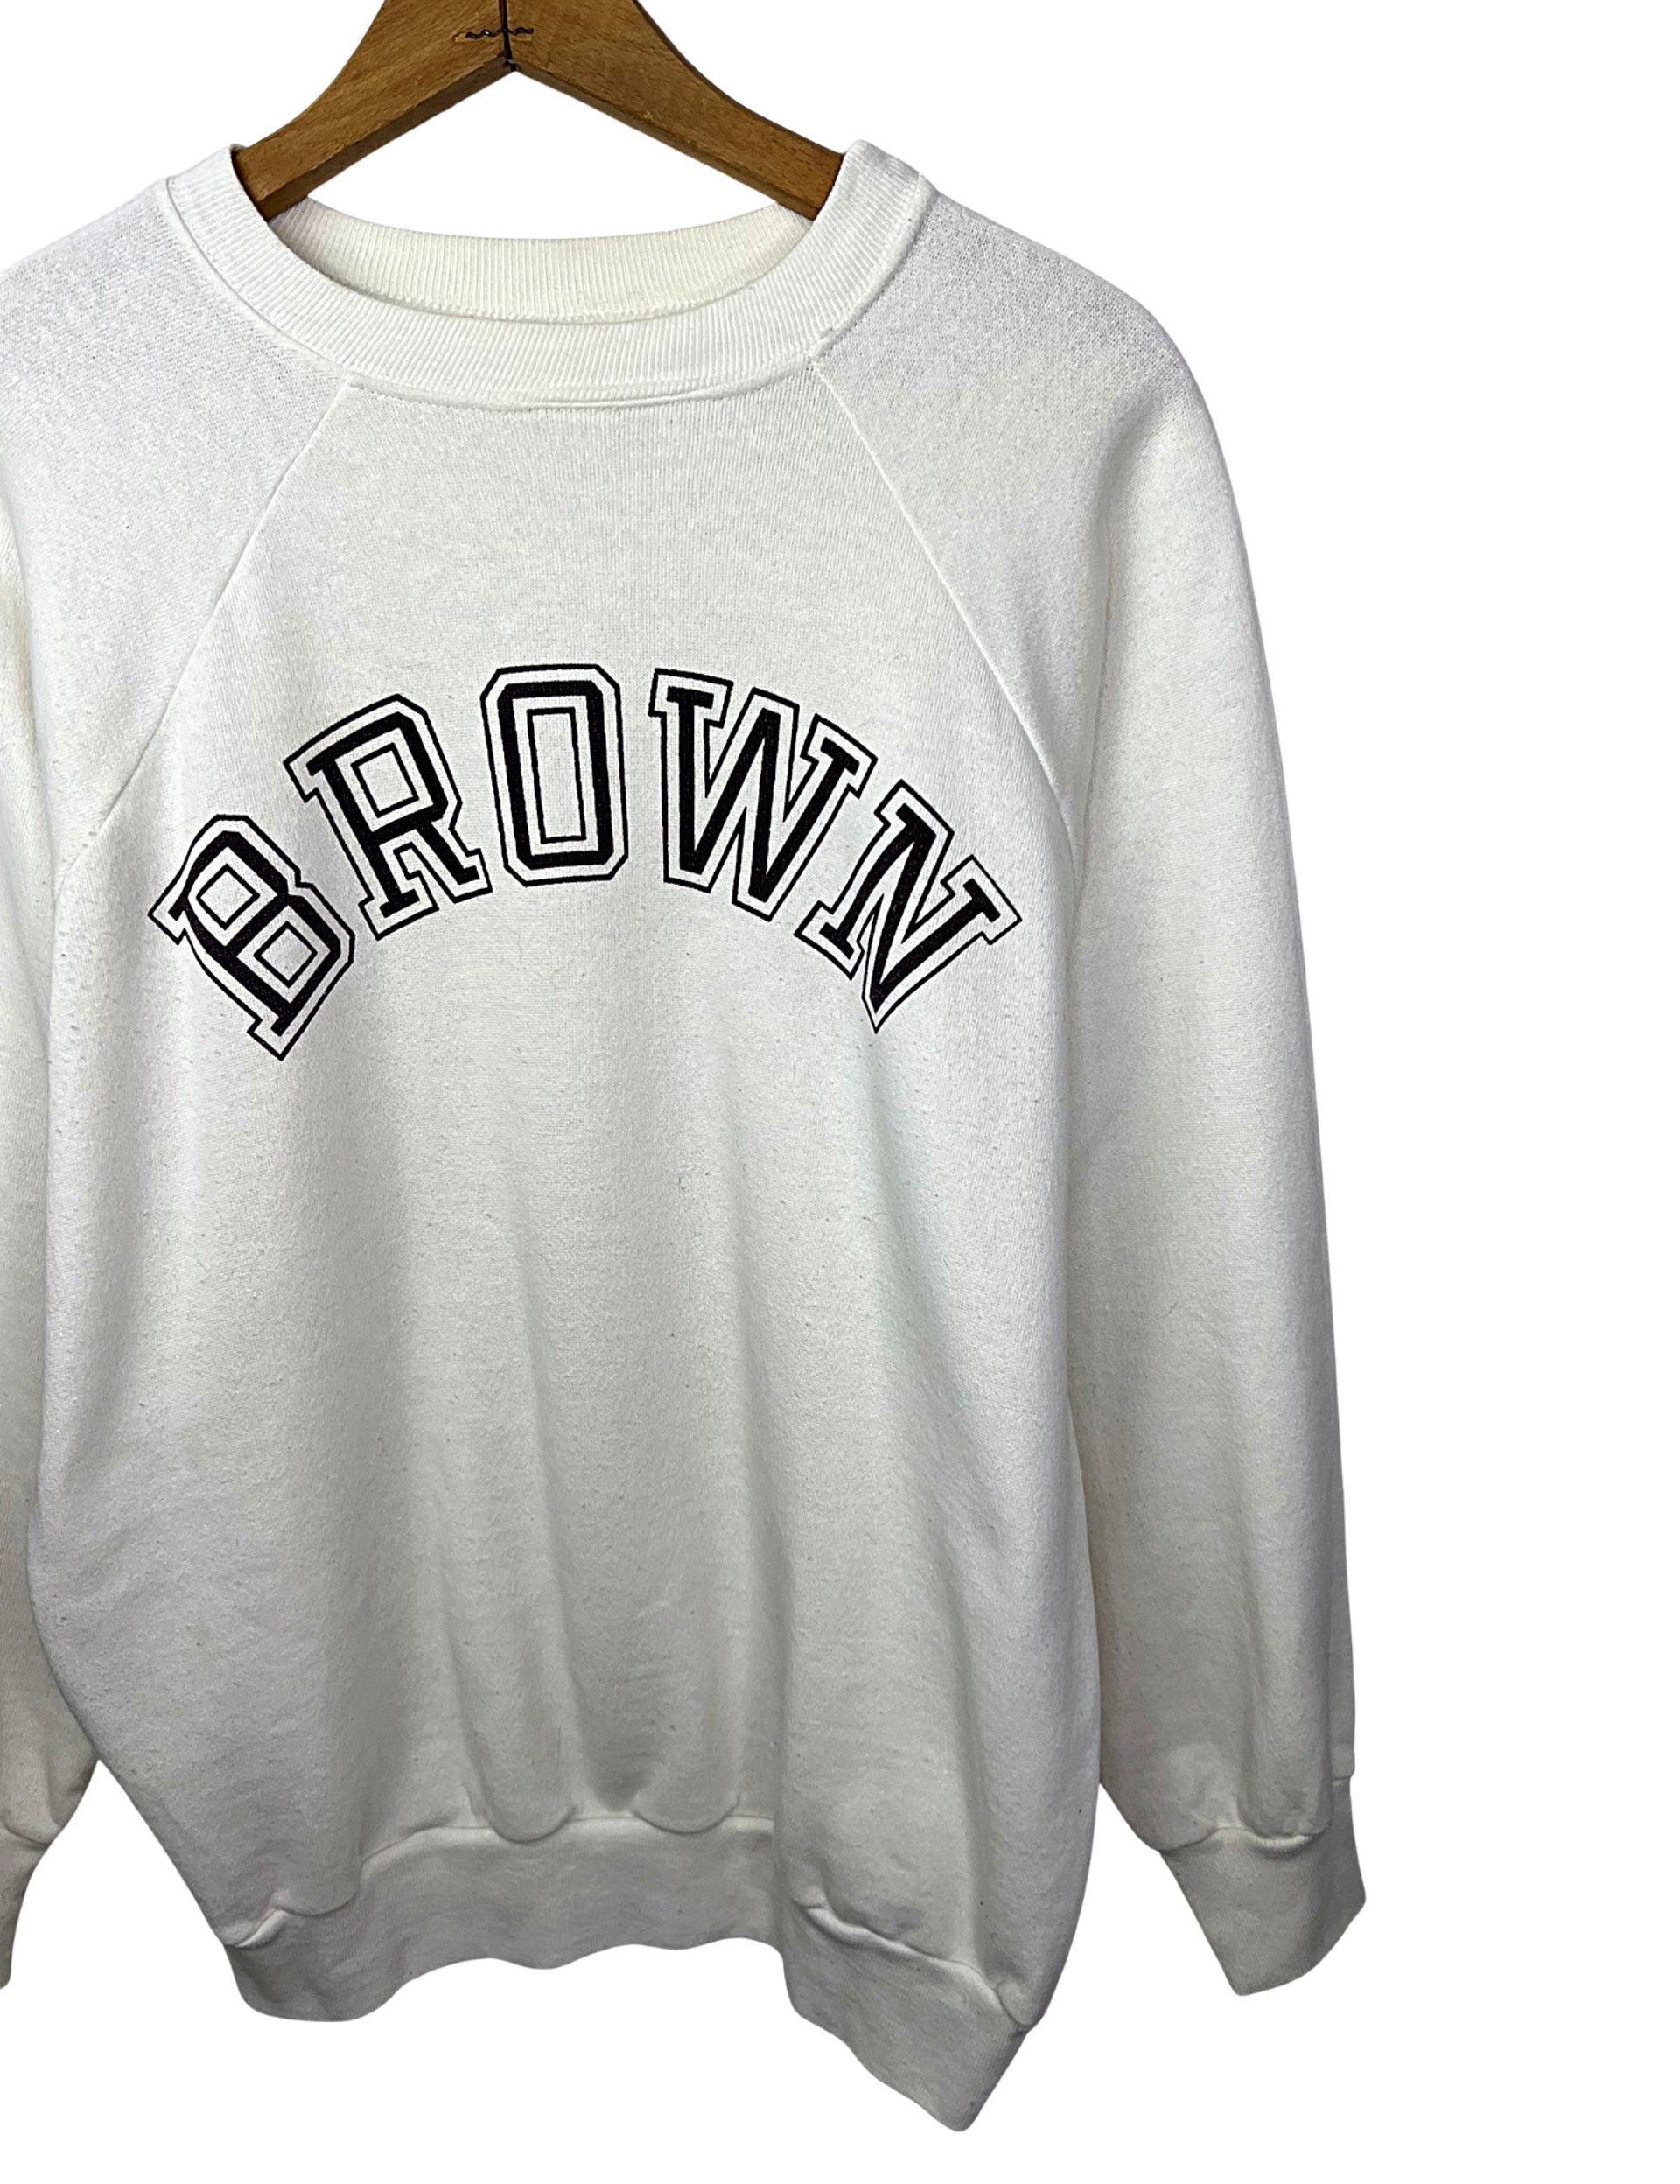 Brown University Sweatshirt 